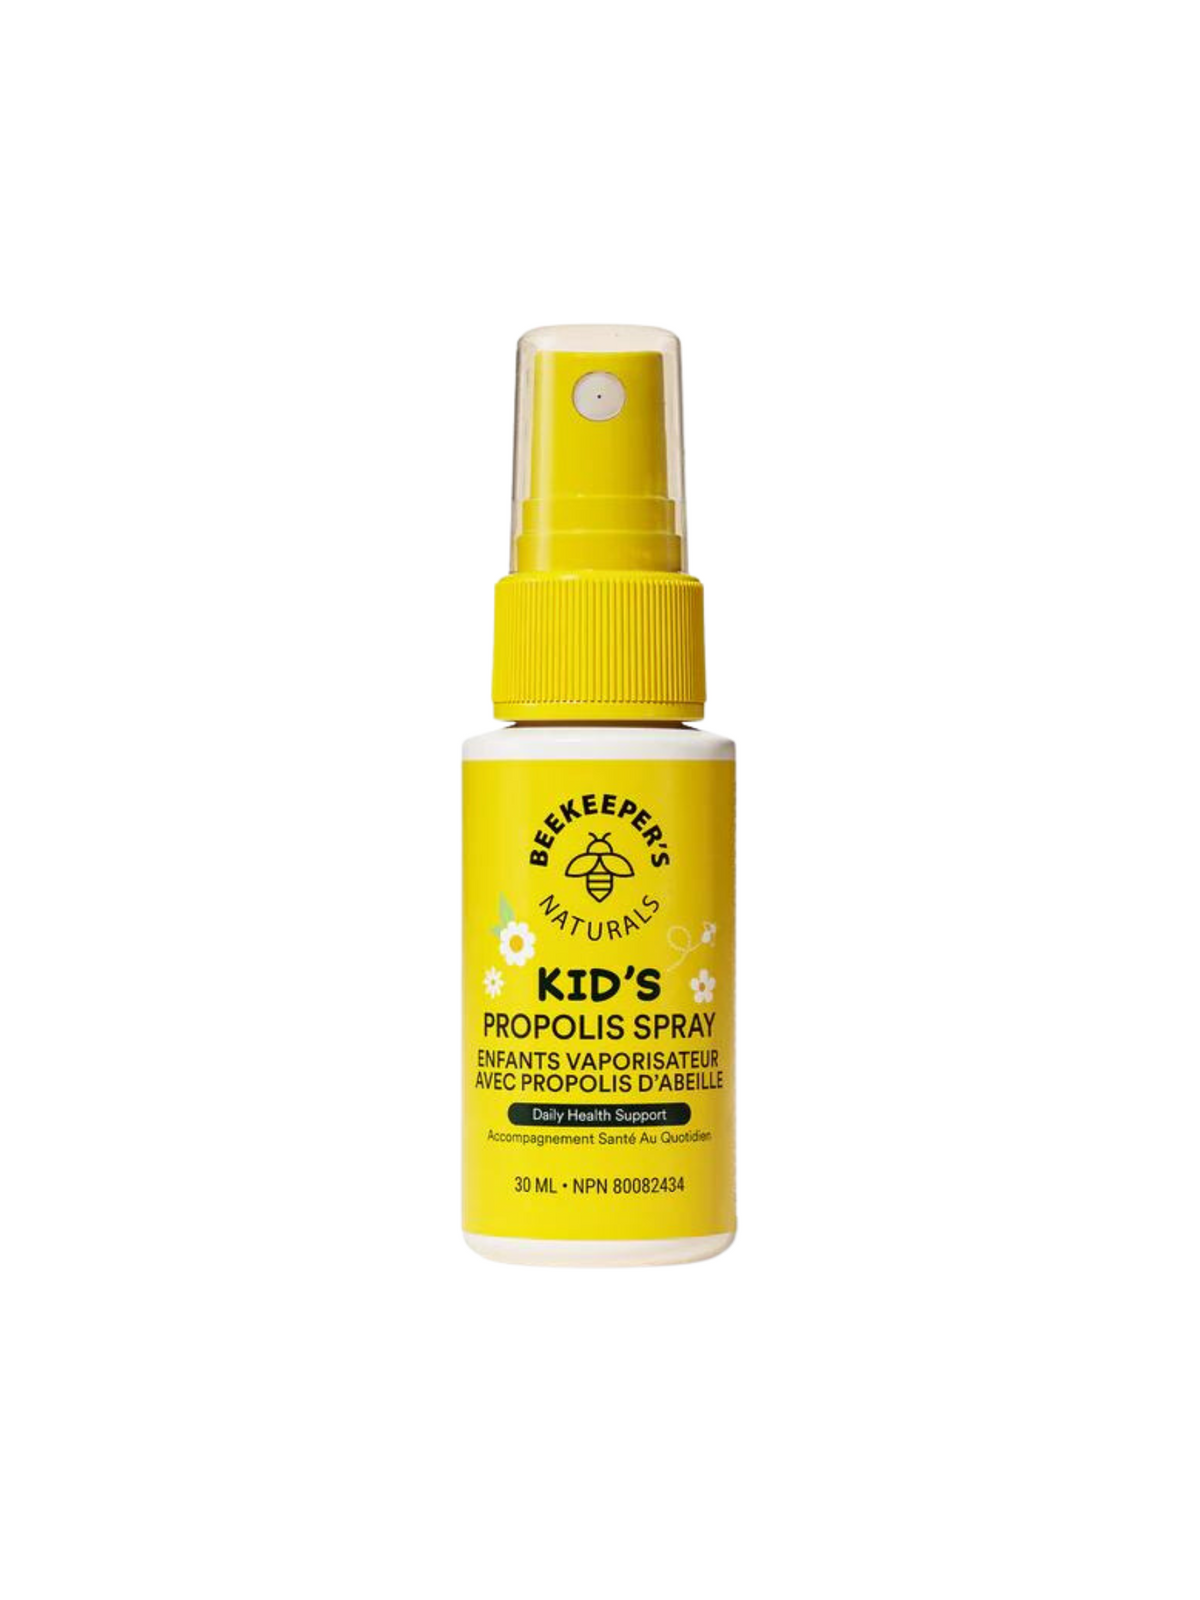 Propolis Throat Spray for Kids